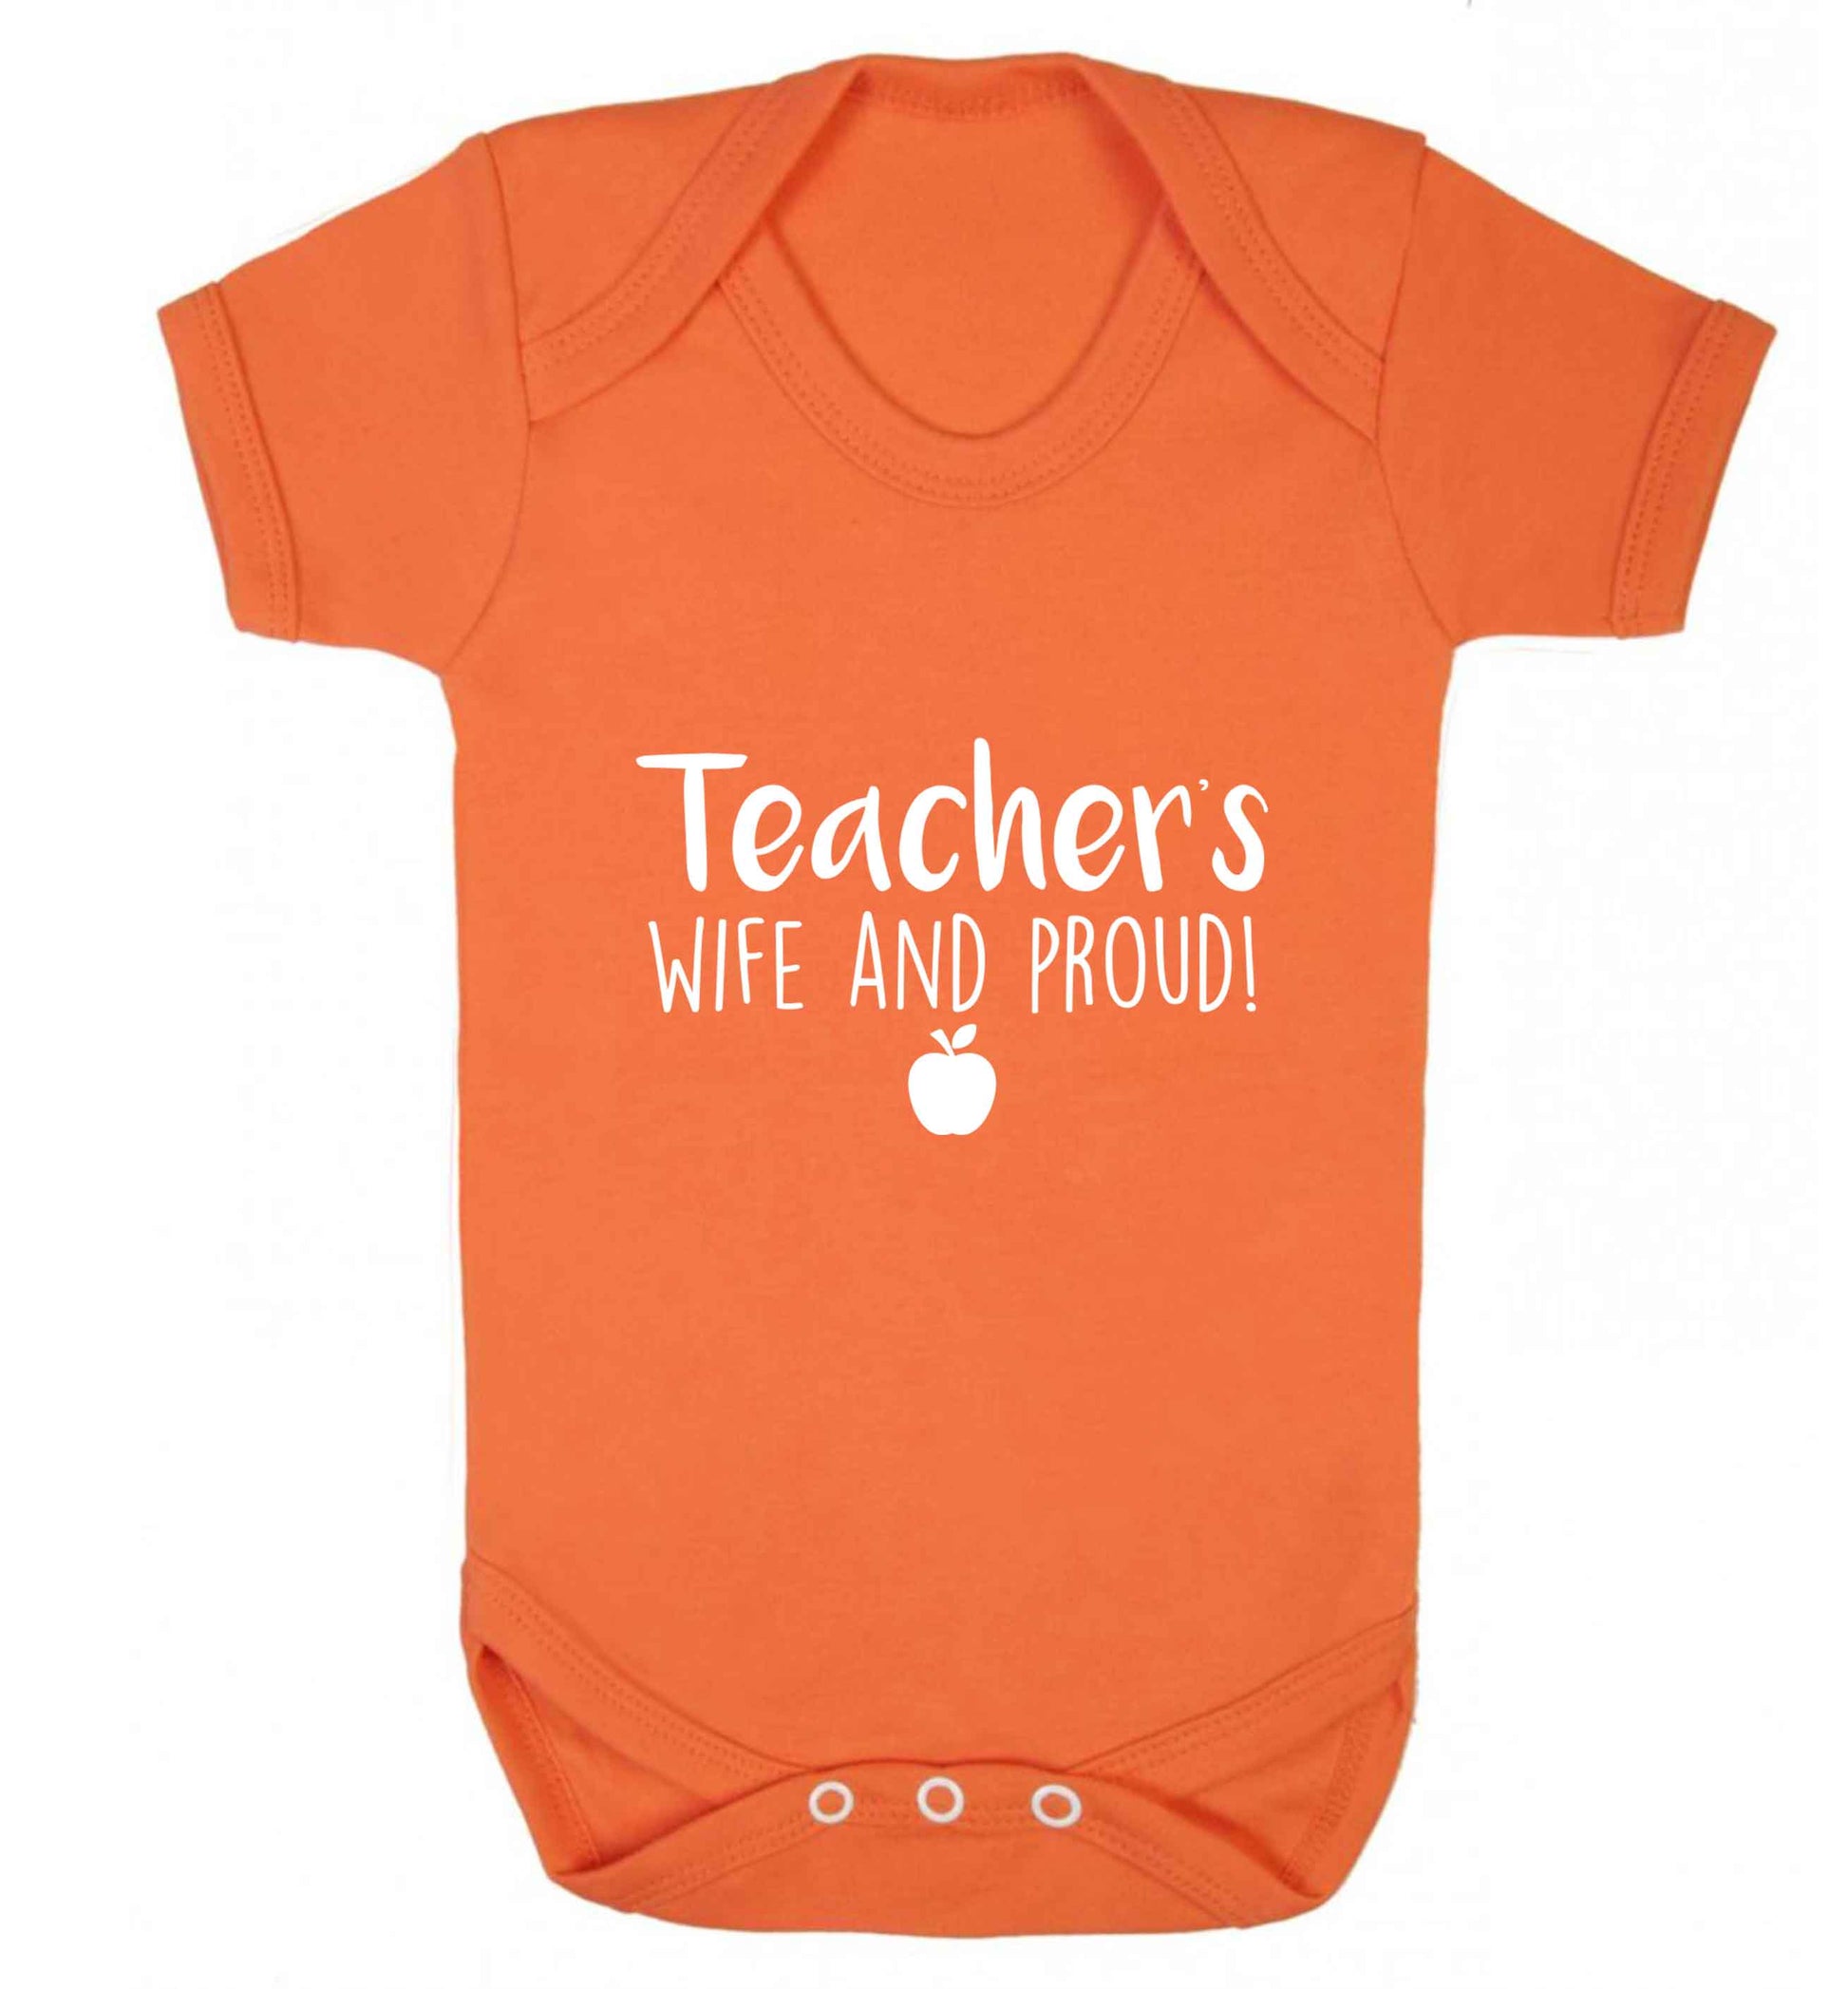 Teachers wife and proud baby vest orange 18-24 months